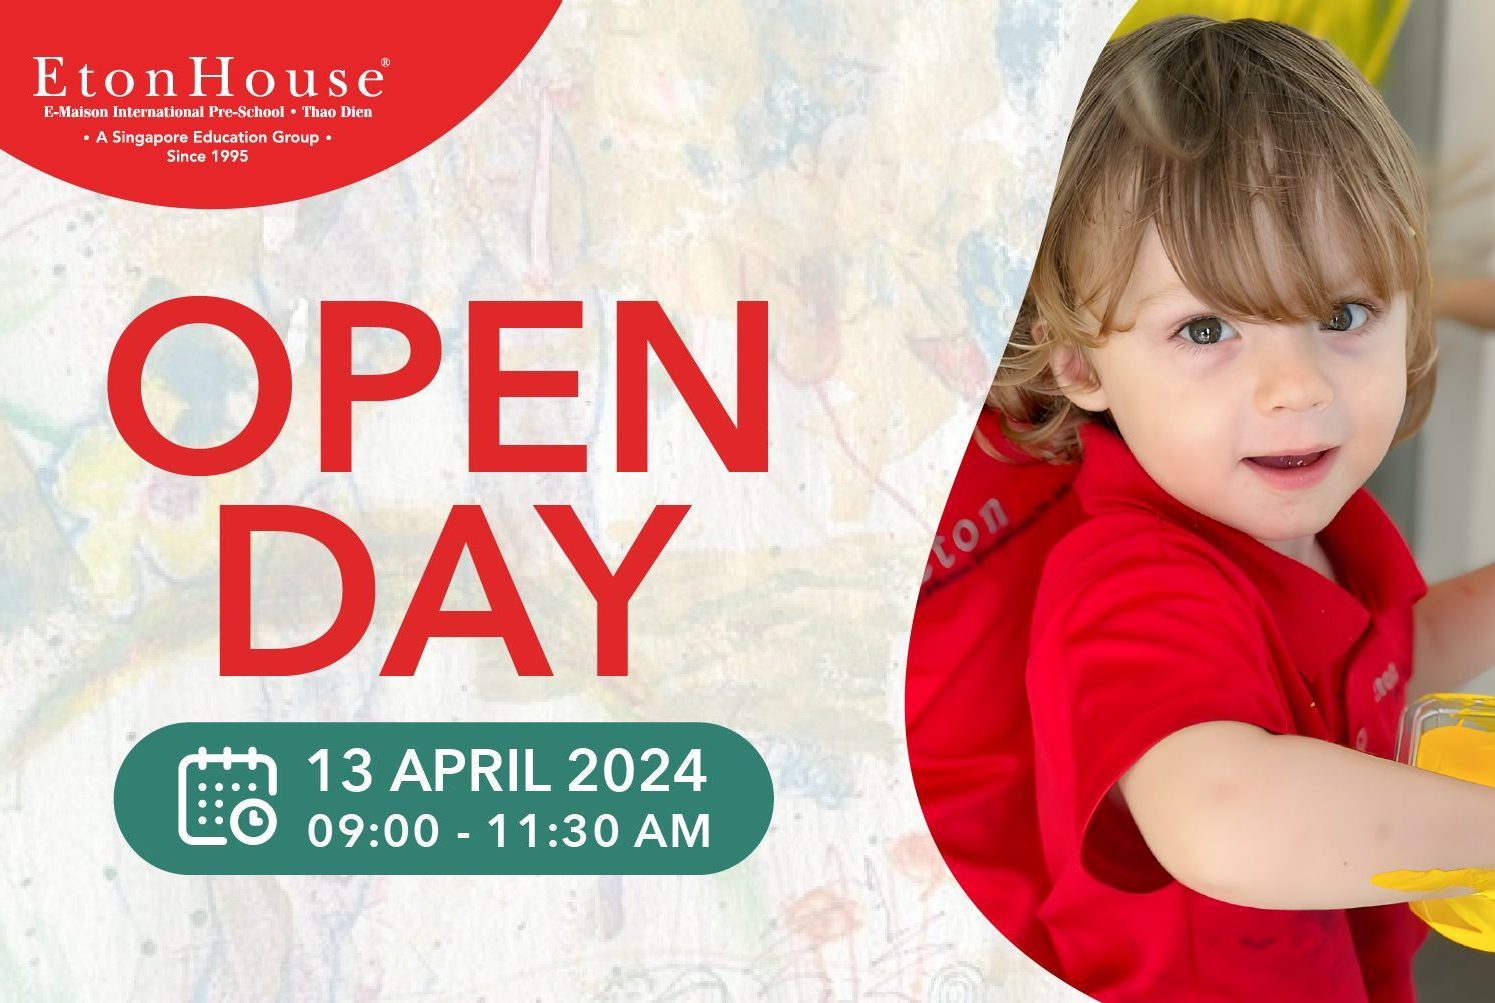 EtonHouse Open Day – 13 APRIL 2024